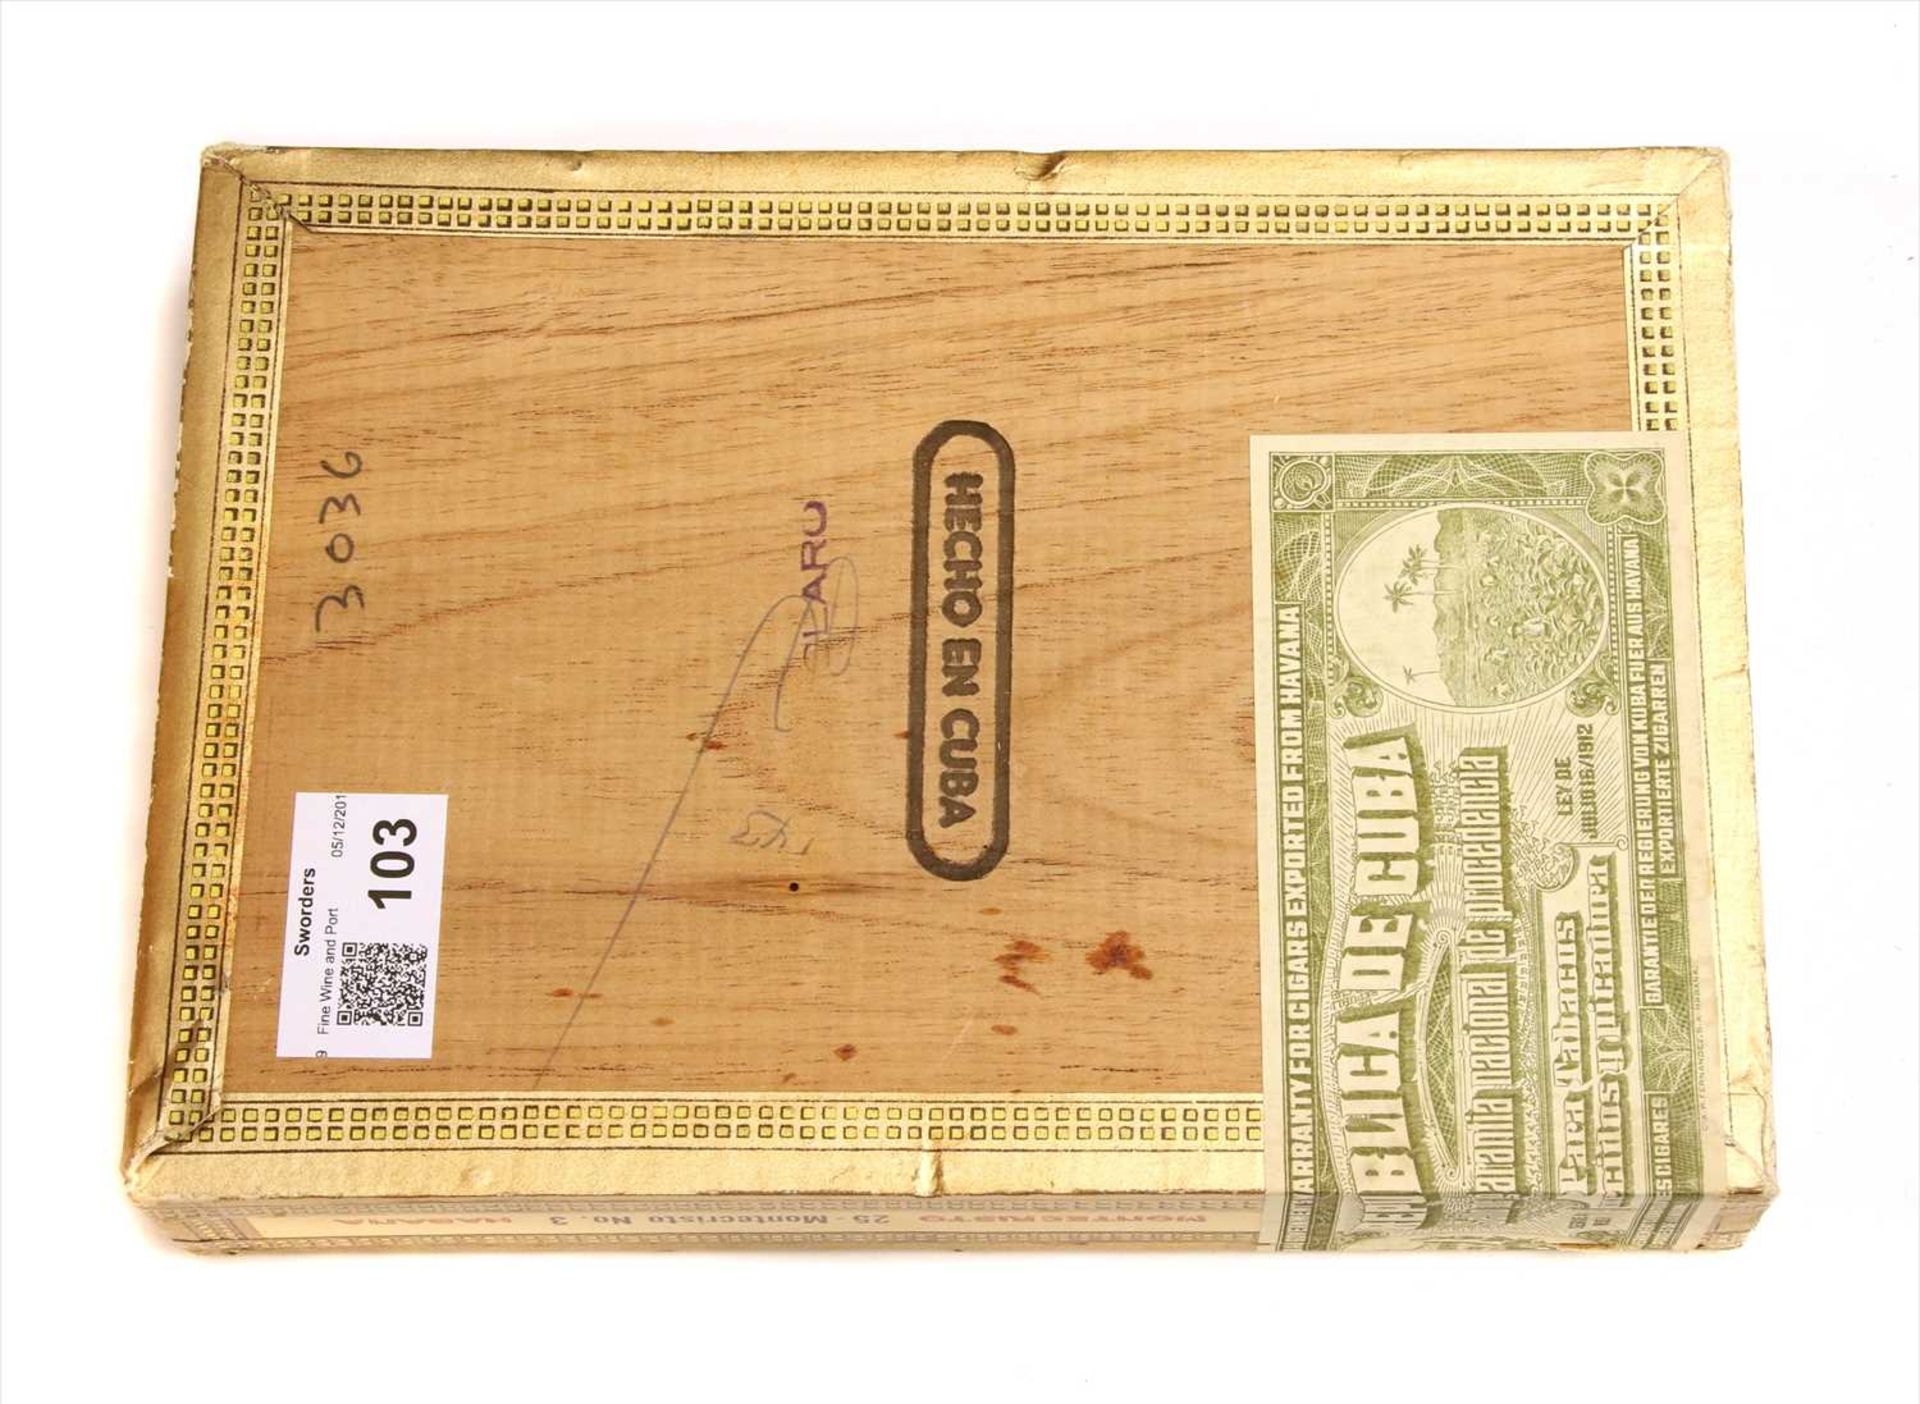 Montecristo, No. 3, 25 cigars, boxed - Image 3 of 6